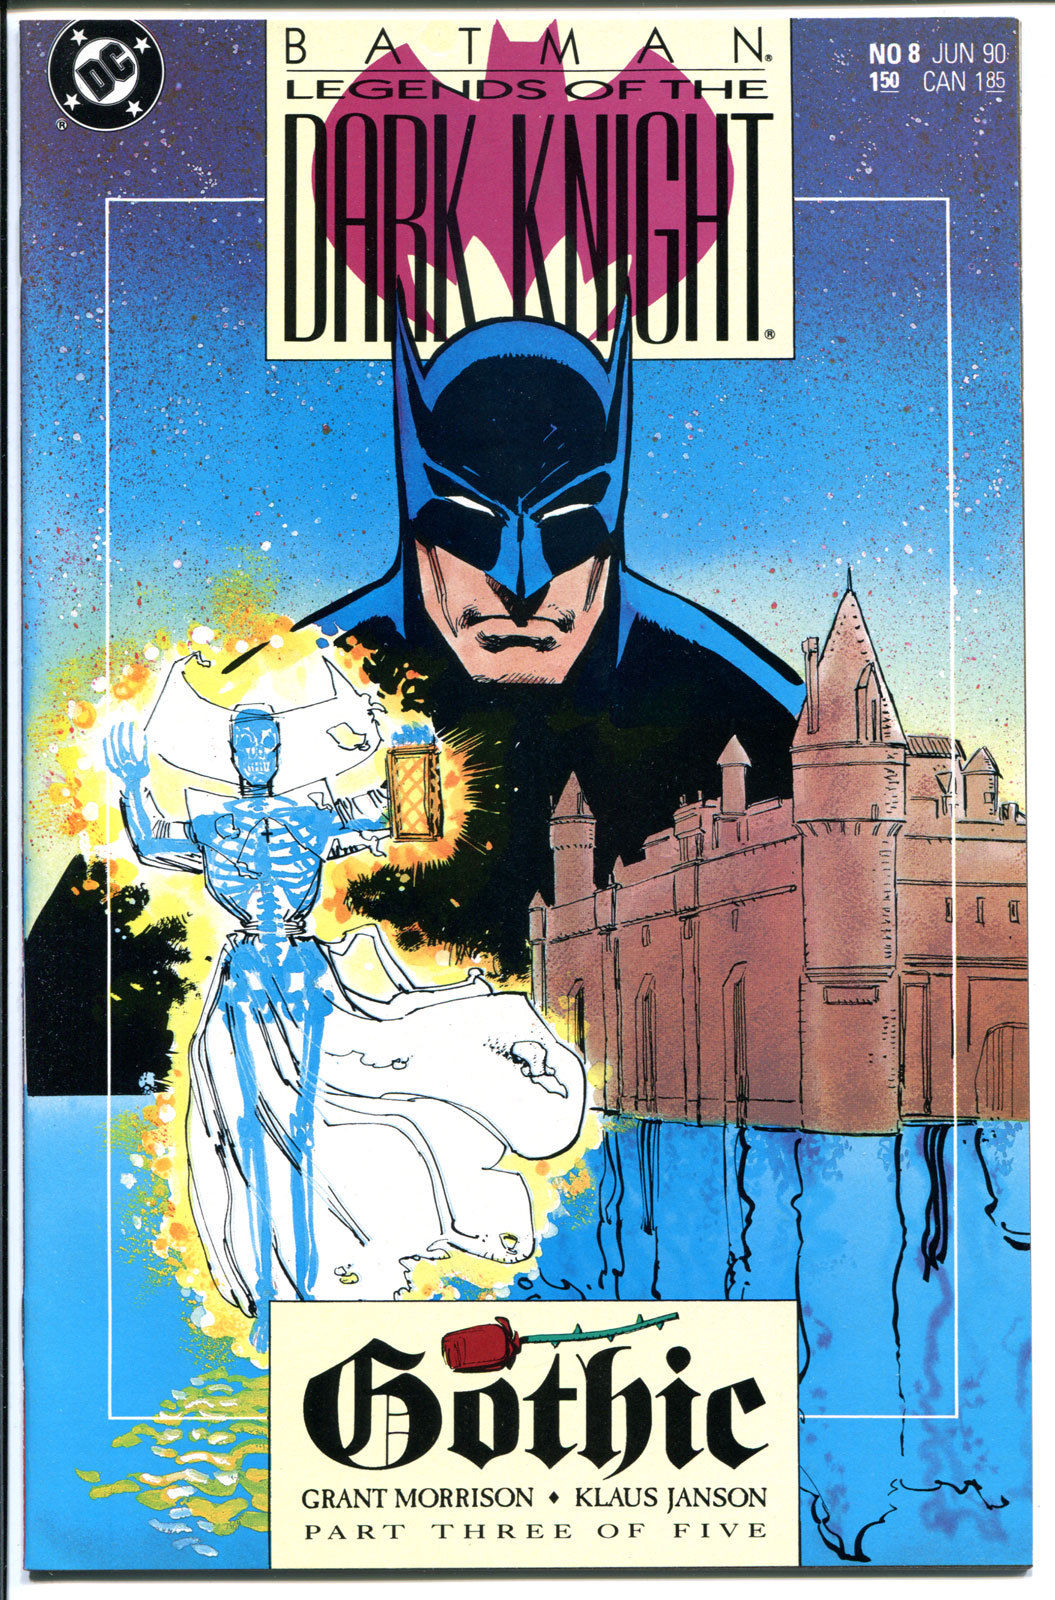 BATMAN : LEGENDS OF THE DARK KNIGHT #8, Gothic, 1989 1990, NM+